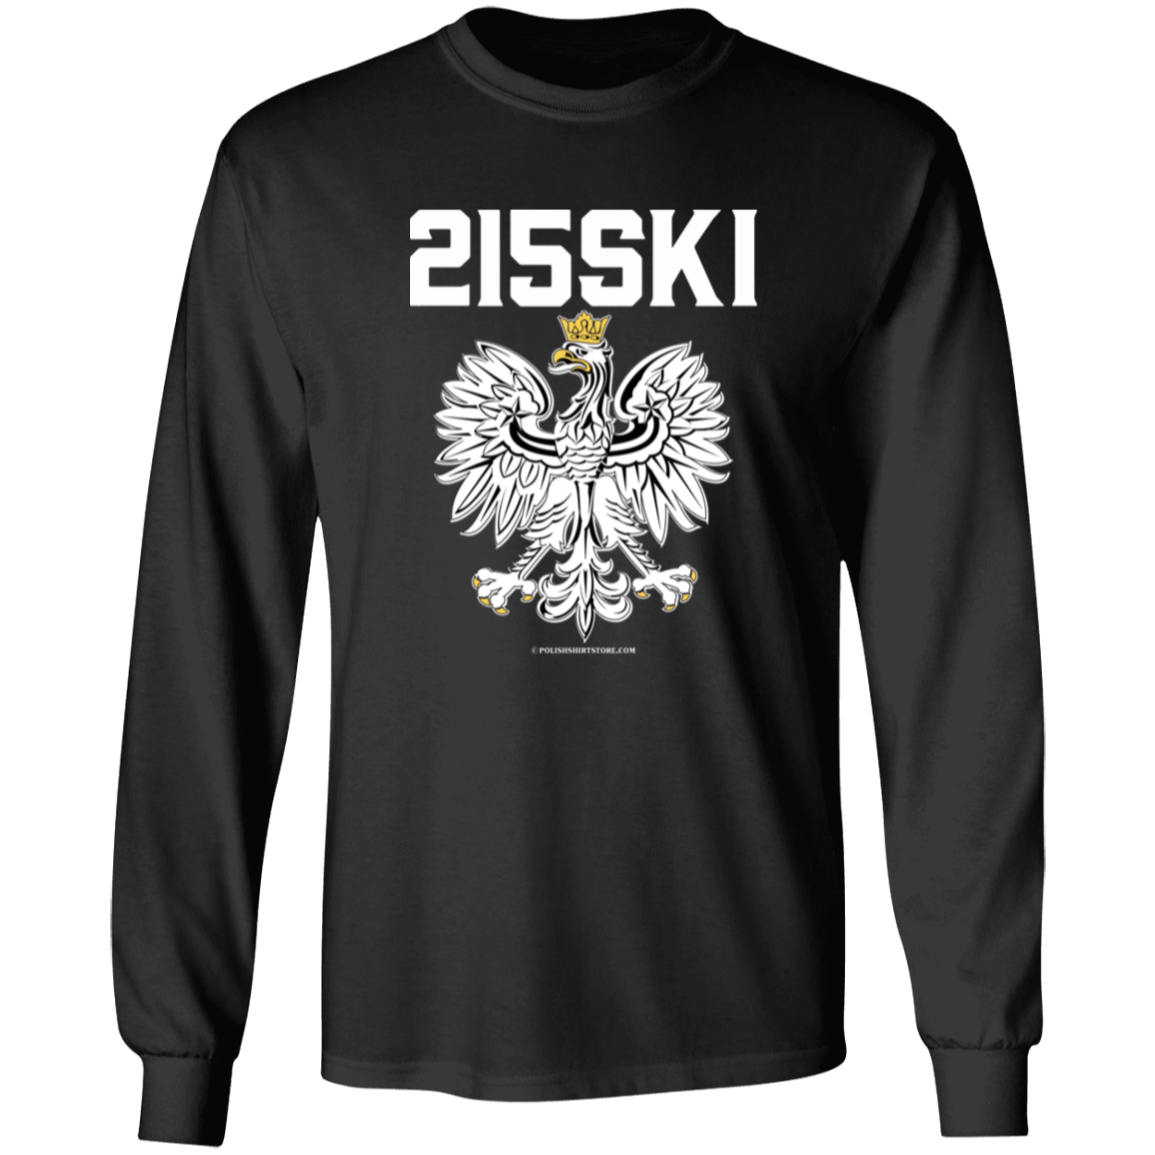 215SKI Area Code 215 Apparel CustomCat G240 LS Ultra Cotton T-Shirt Black S